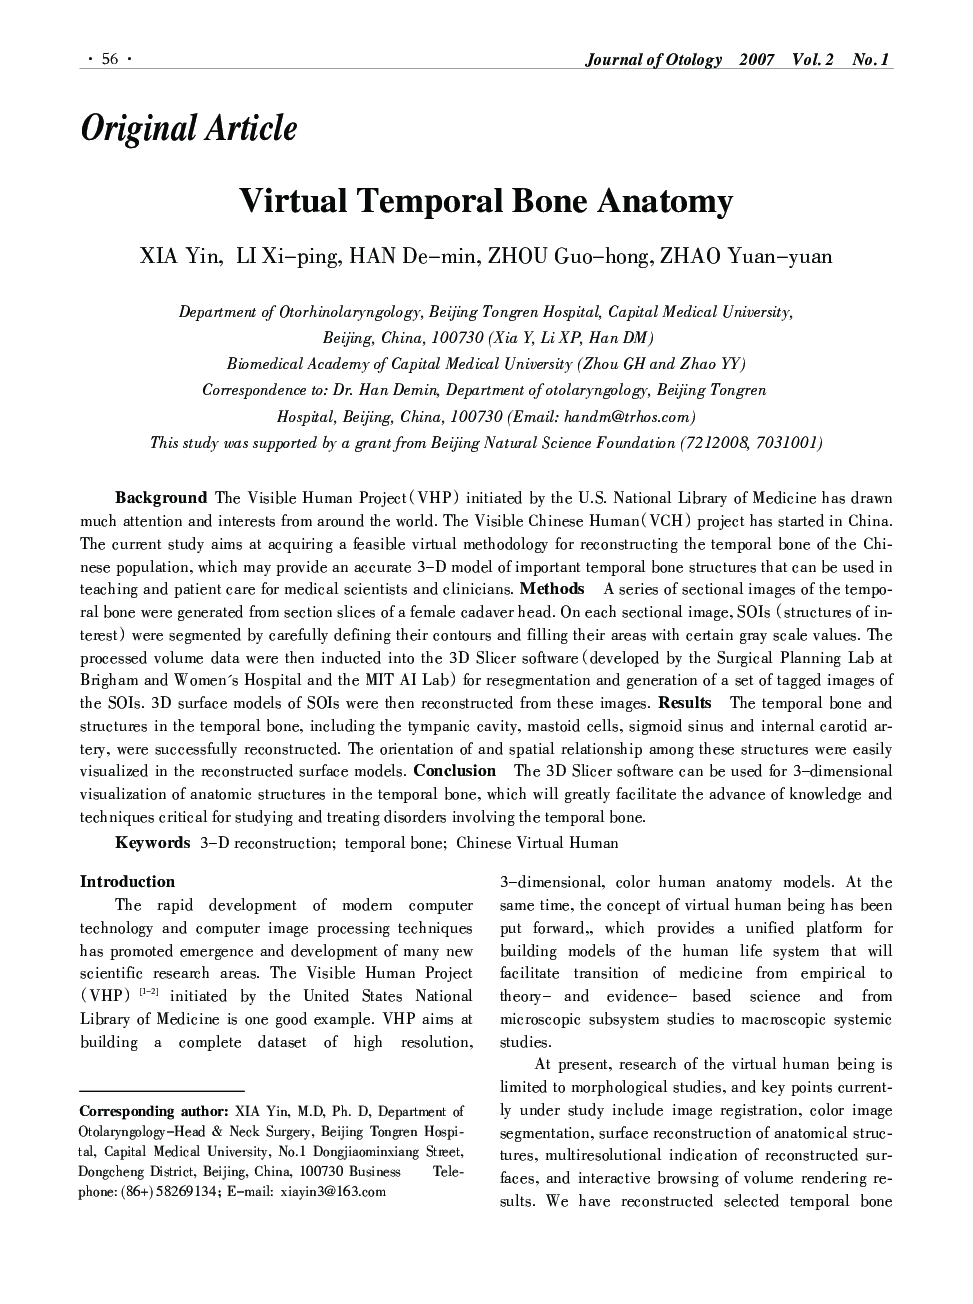 Virtual Temporal Bone Anatomy 